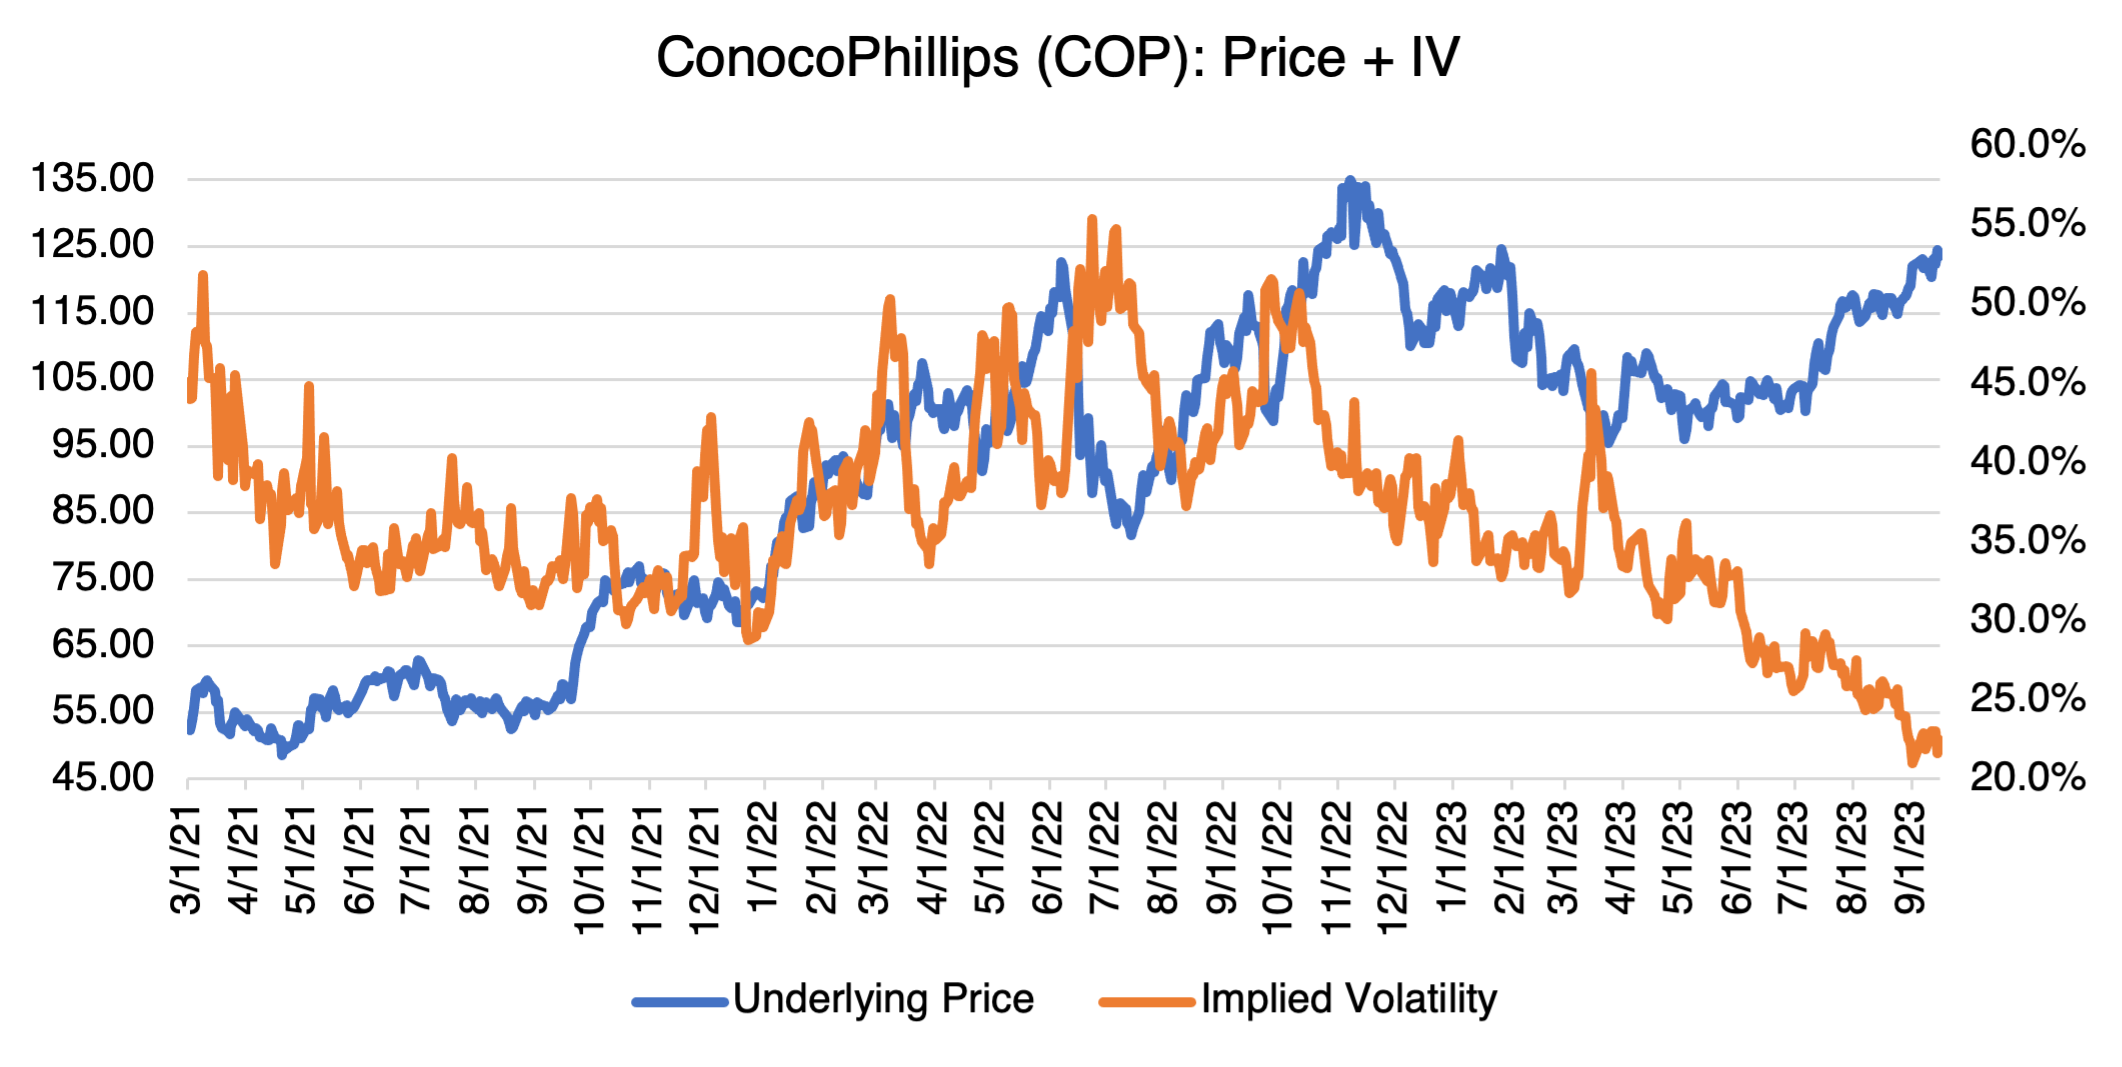 ConocoPhillips (COP): Price + IV